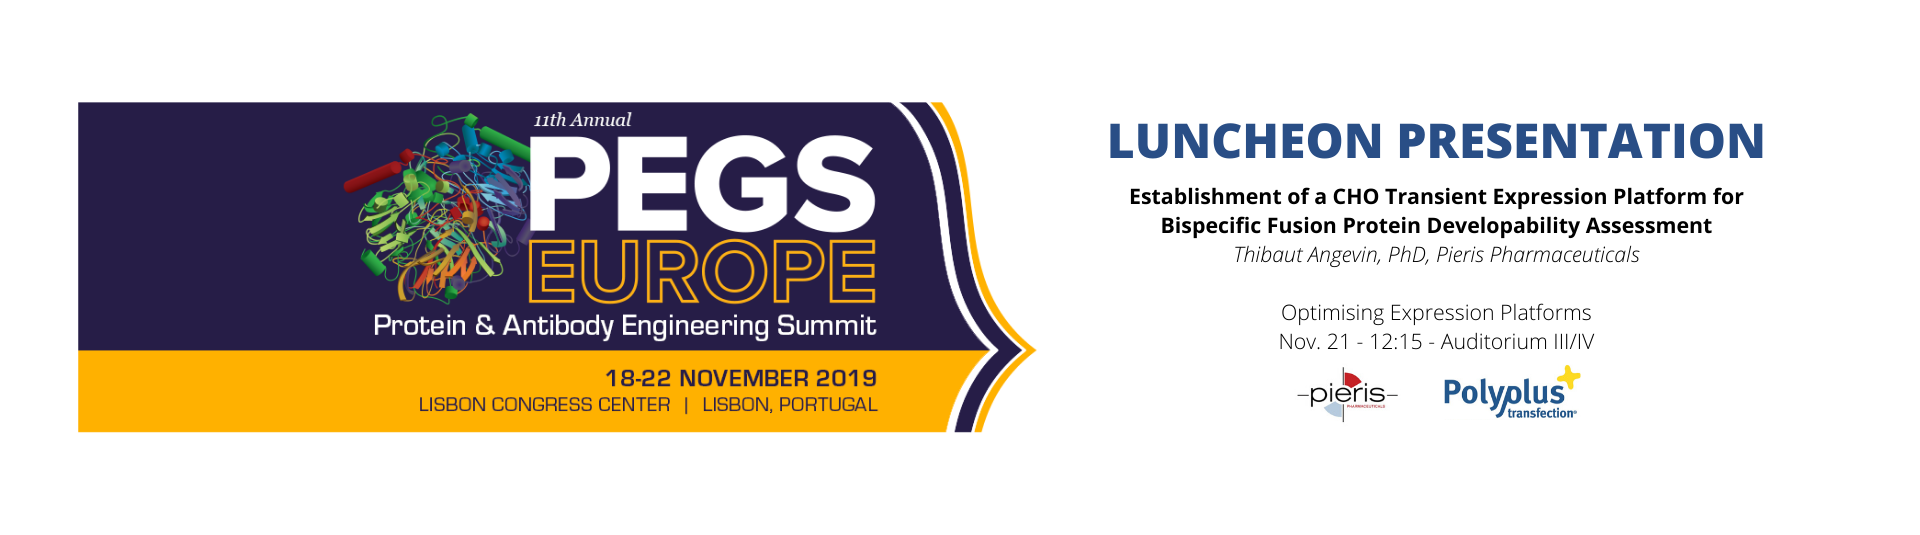 PEGS Europe meeting, Lisbon (Portugal), November 18-22th, 2019